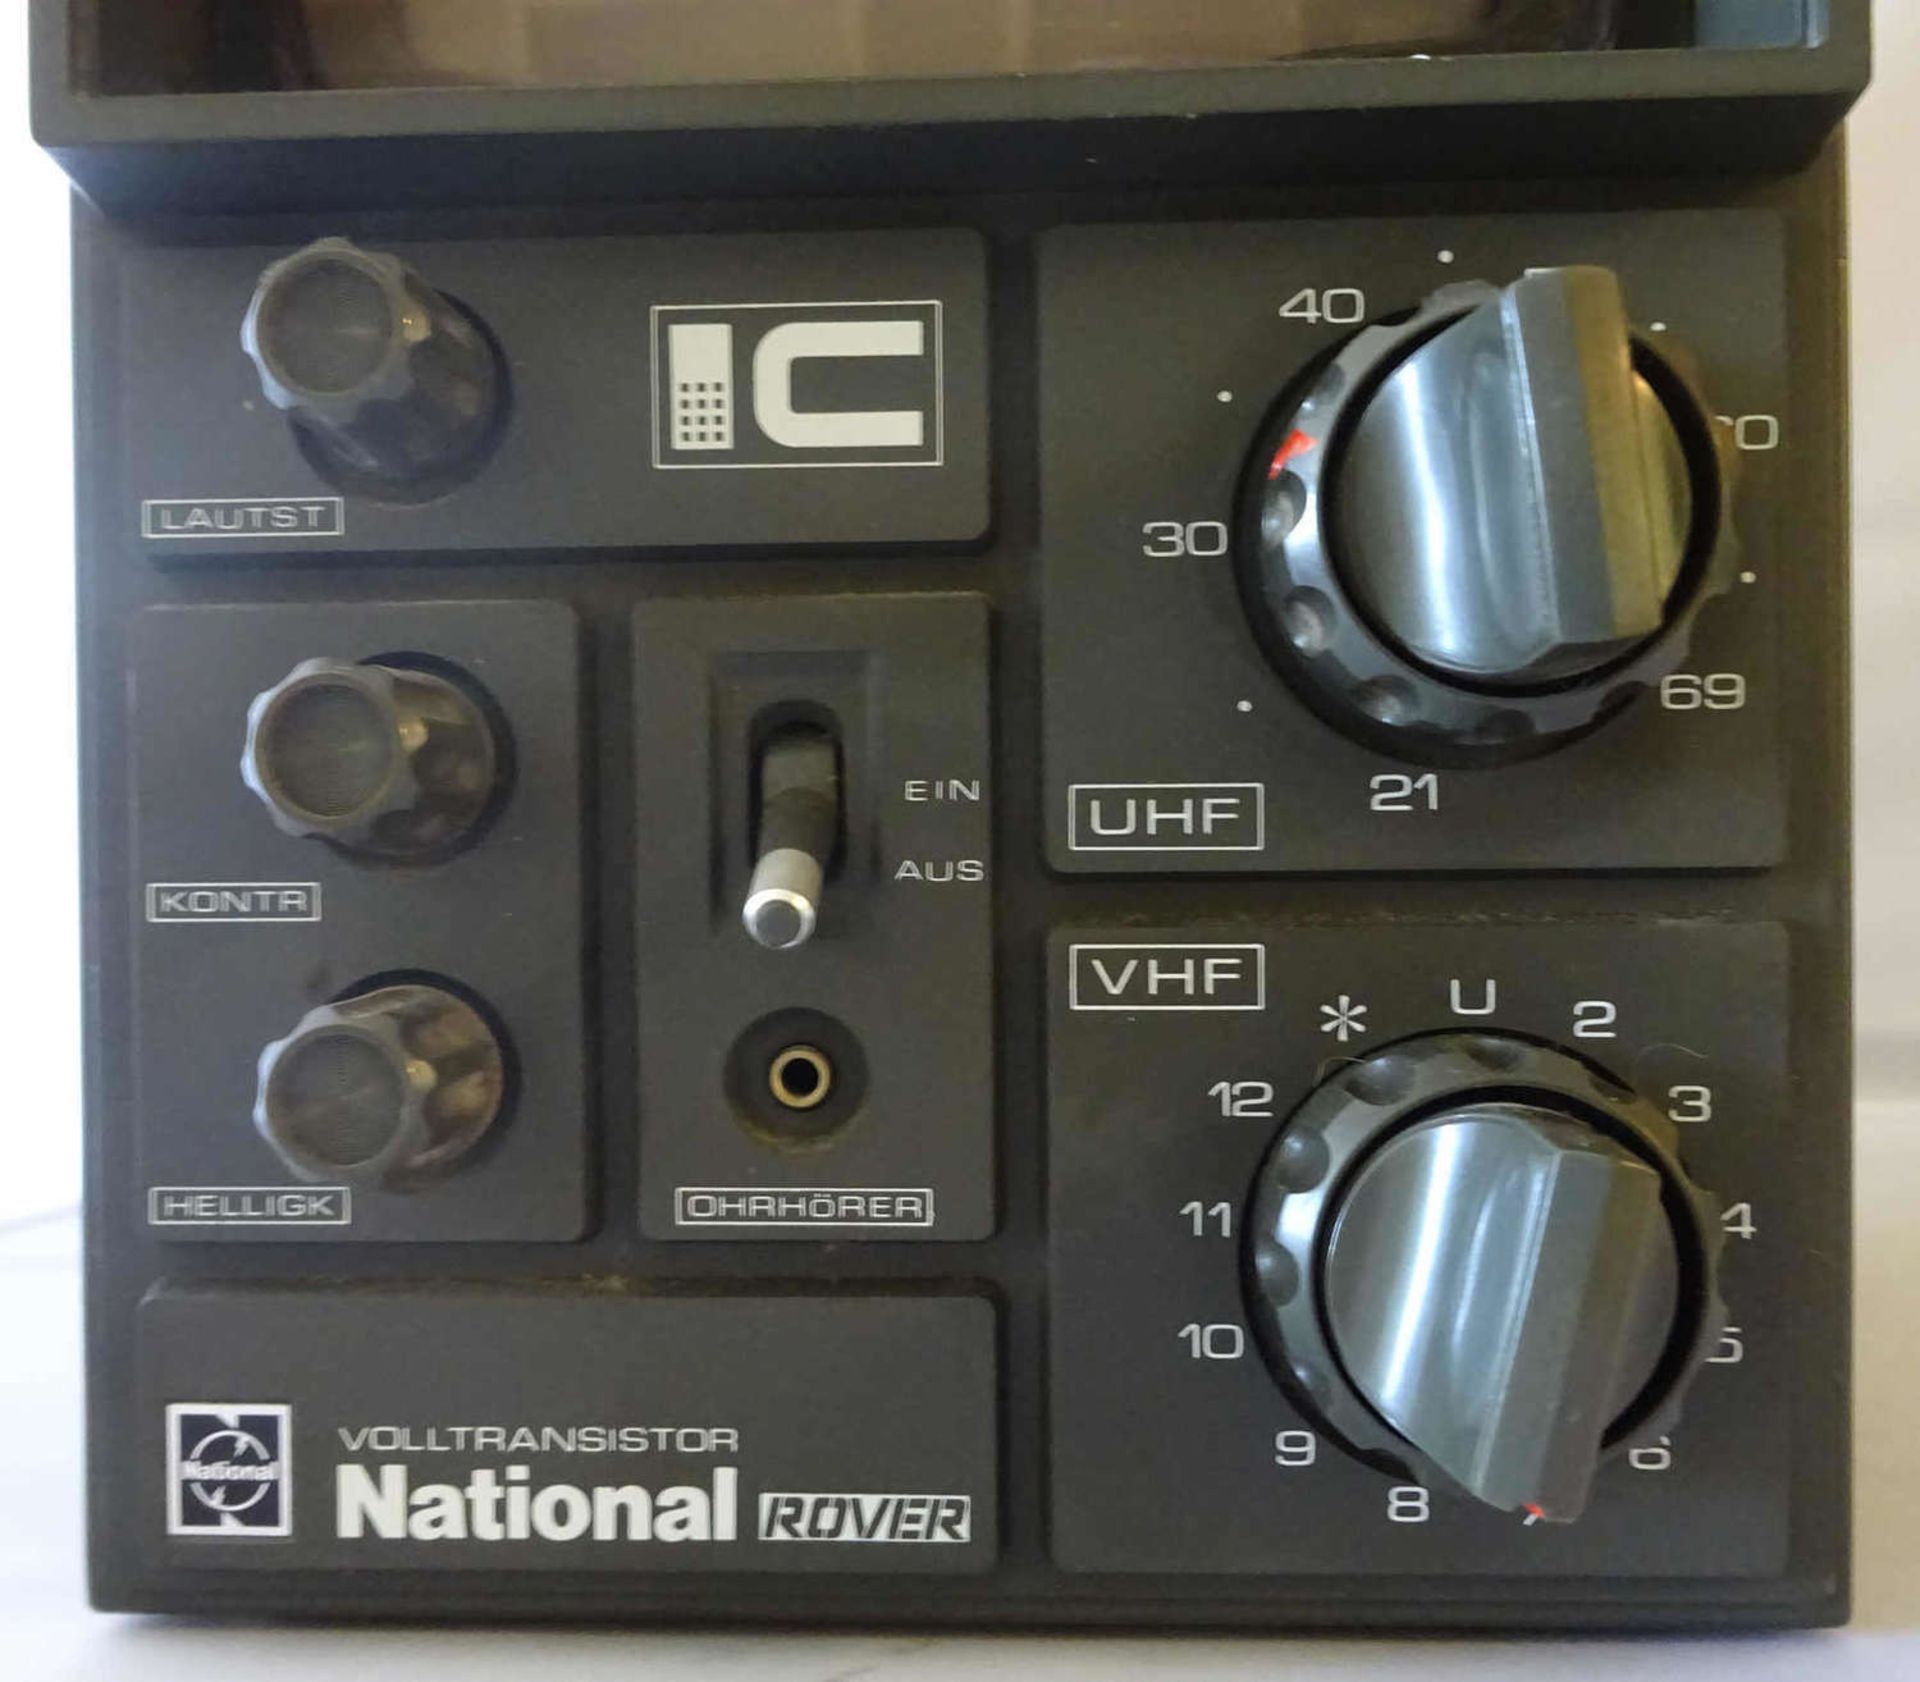 Tragbares TV Gerät. Volltransistor National Rover. Ca. Mitte 70er Jahre. Funktion nicht geprüft. - Image 2 of 5